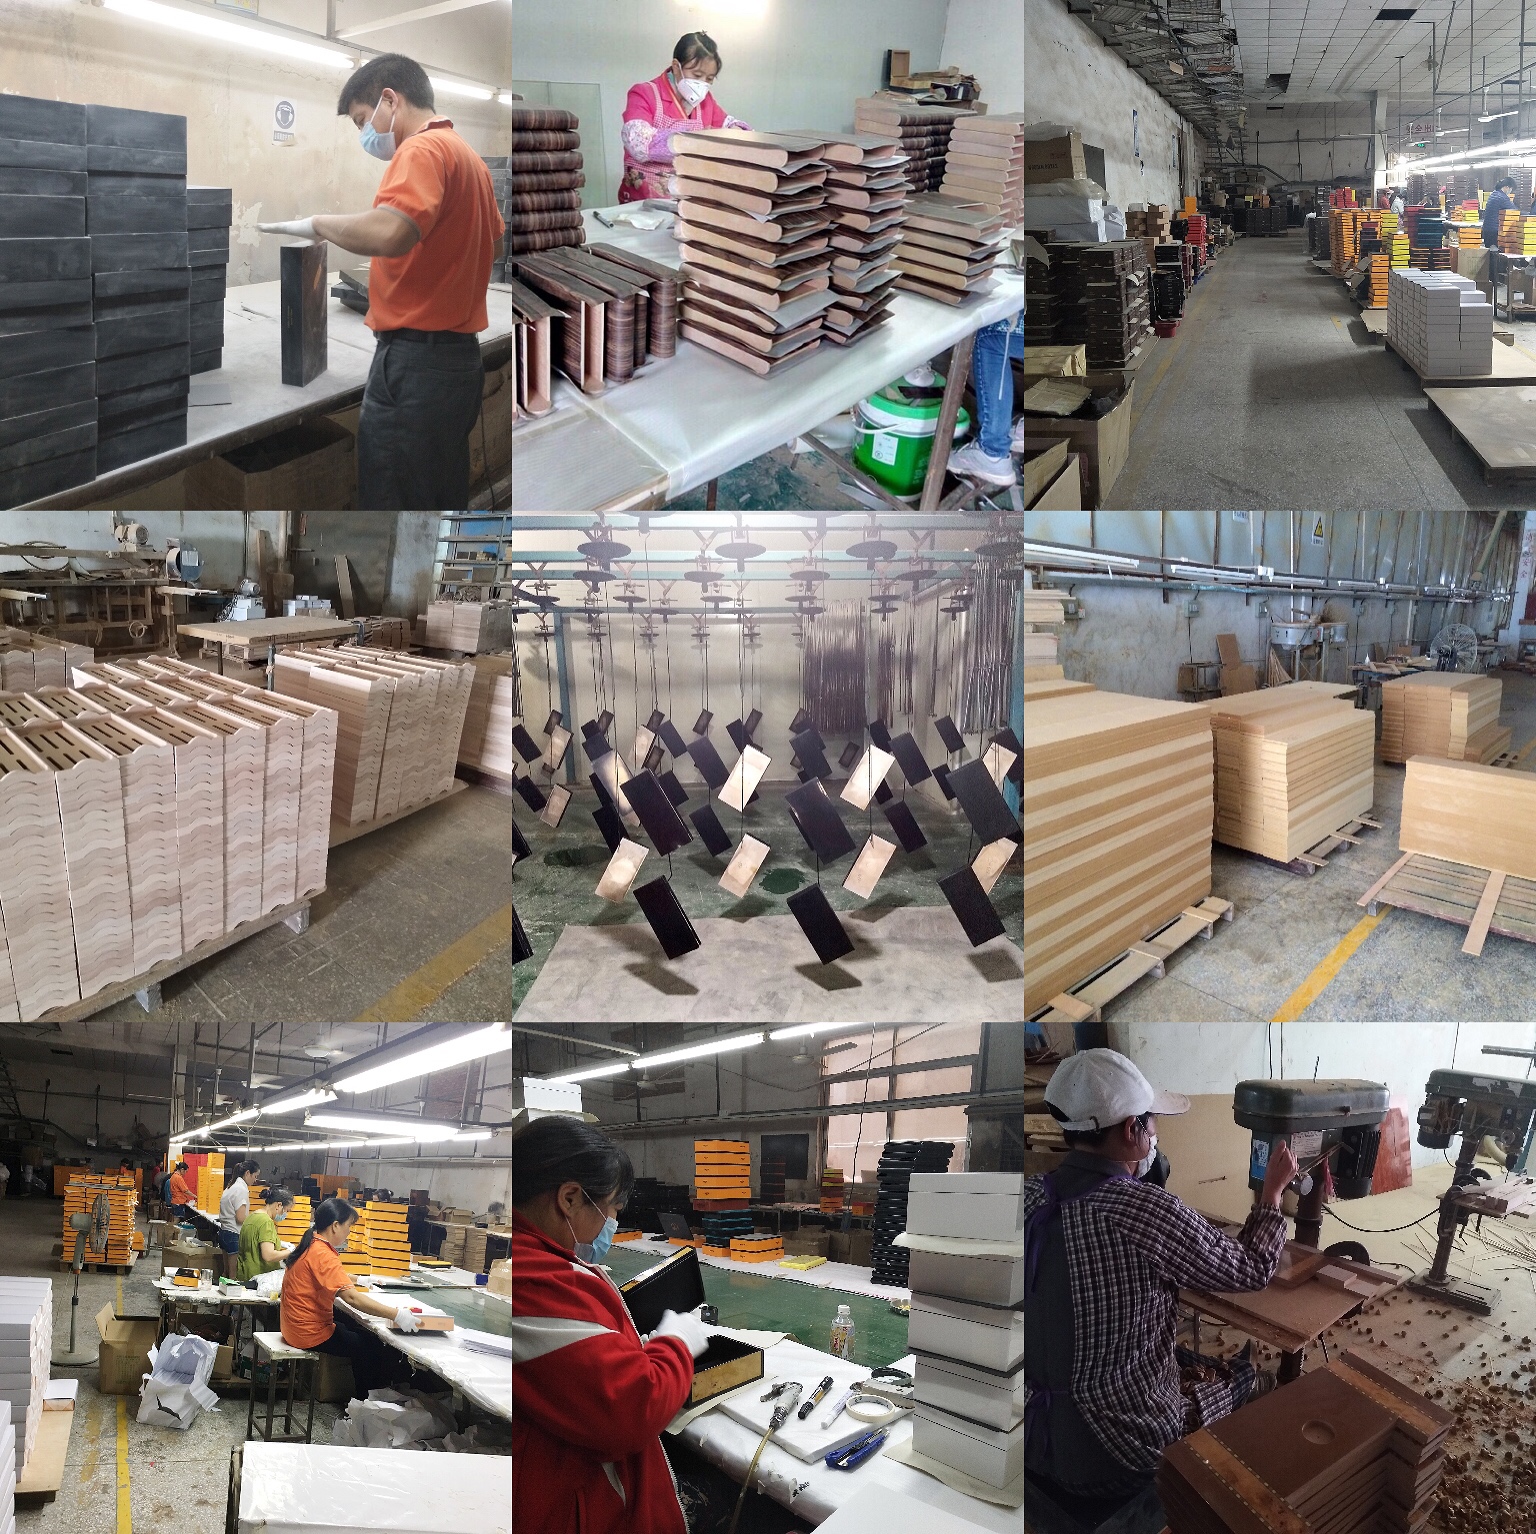  Shenzhen Weilongxin Crafts & Gifts Co. 17